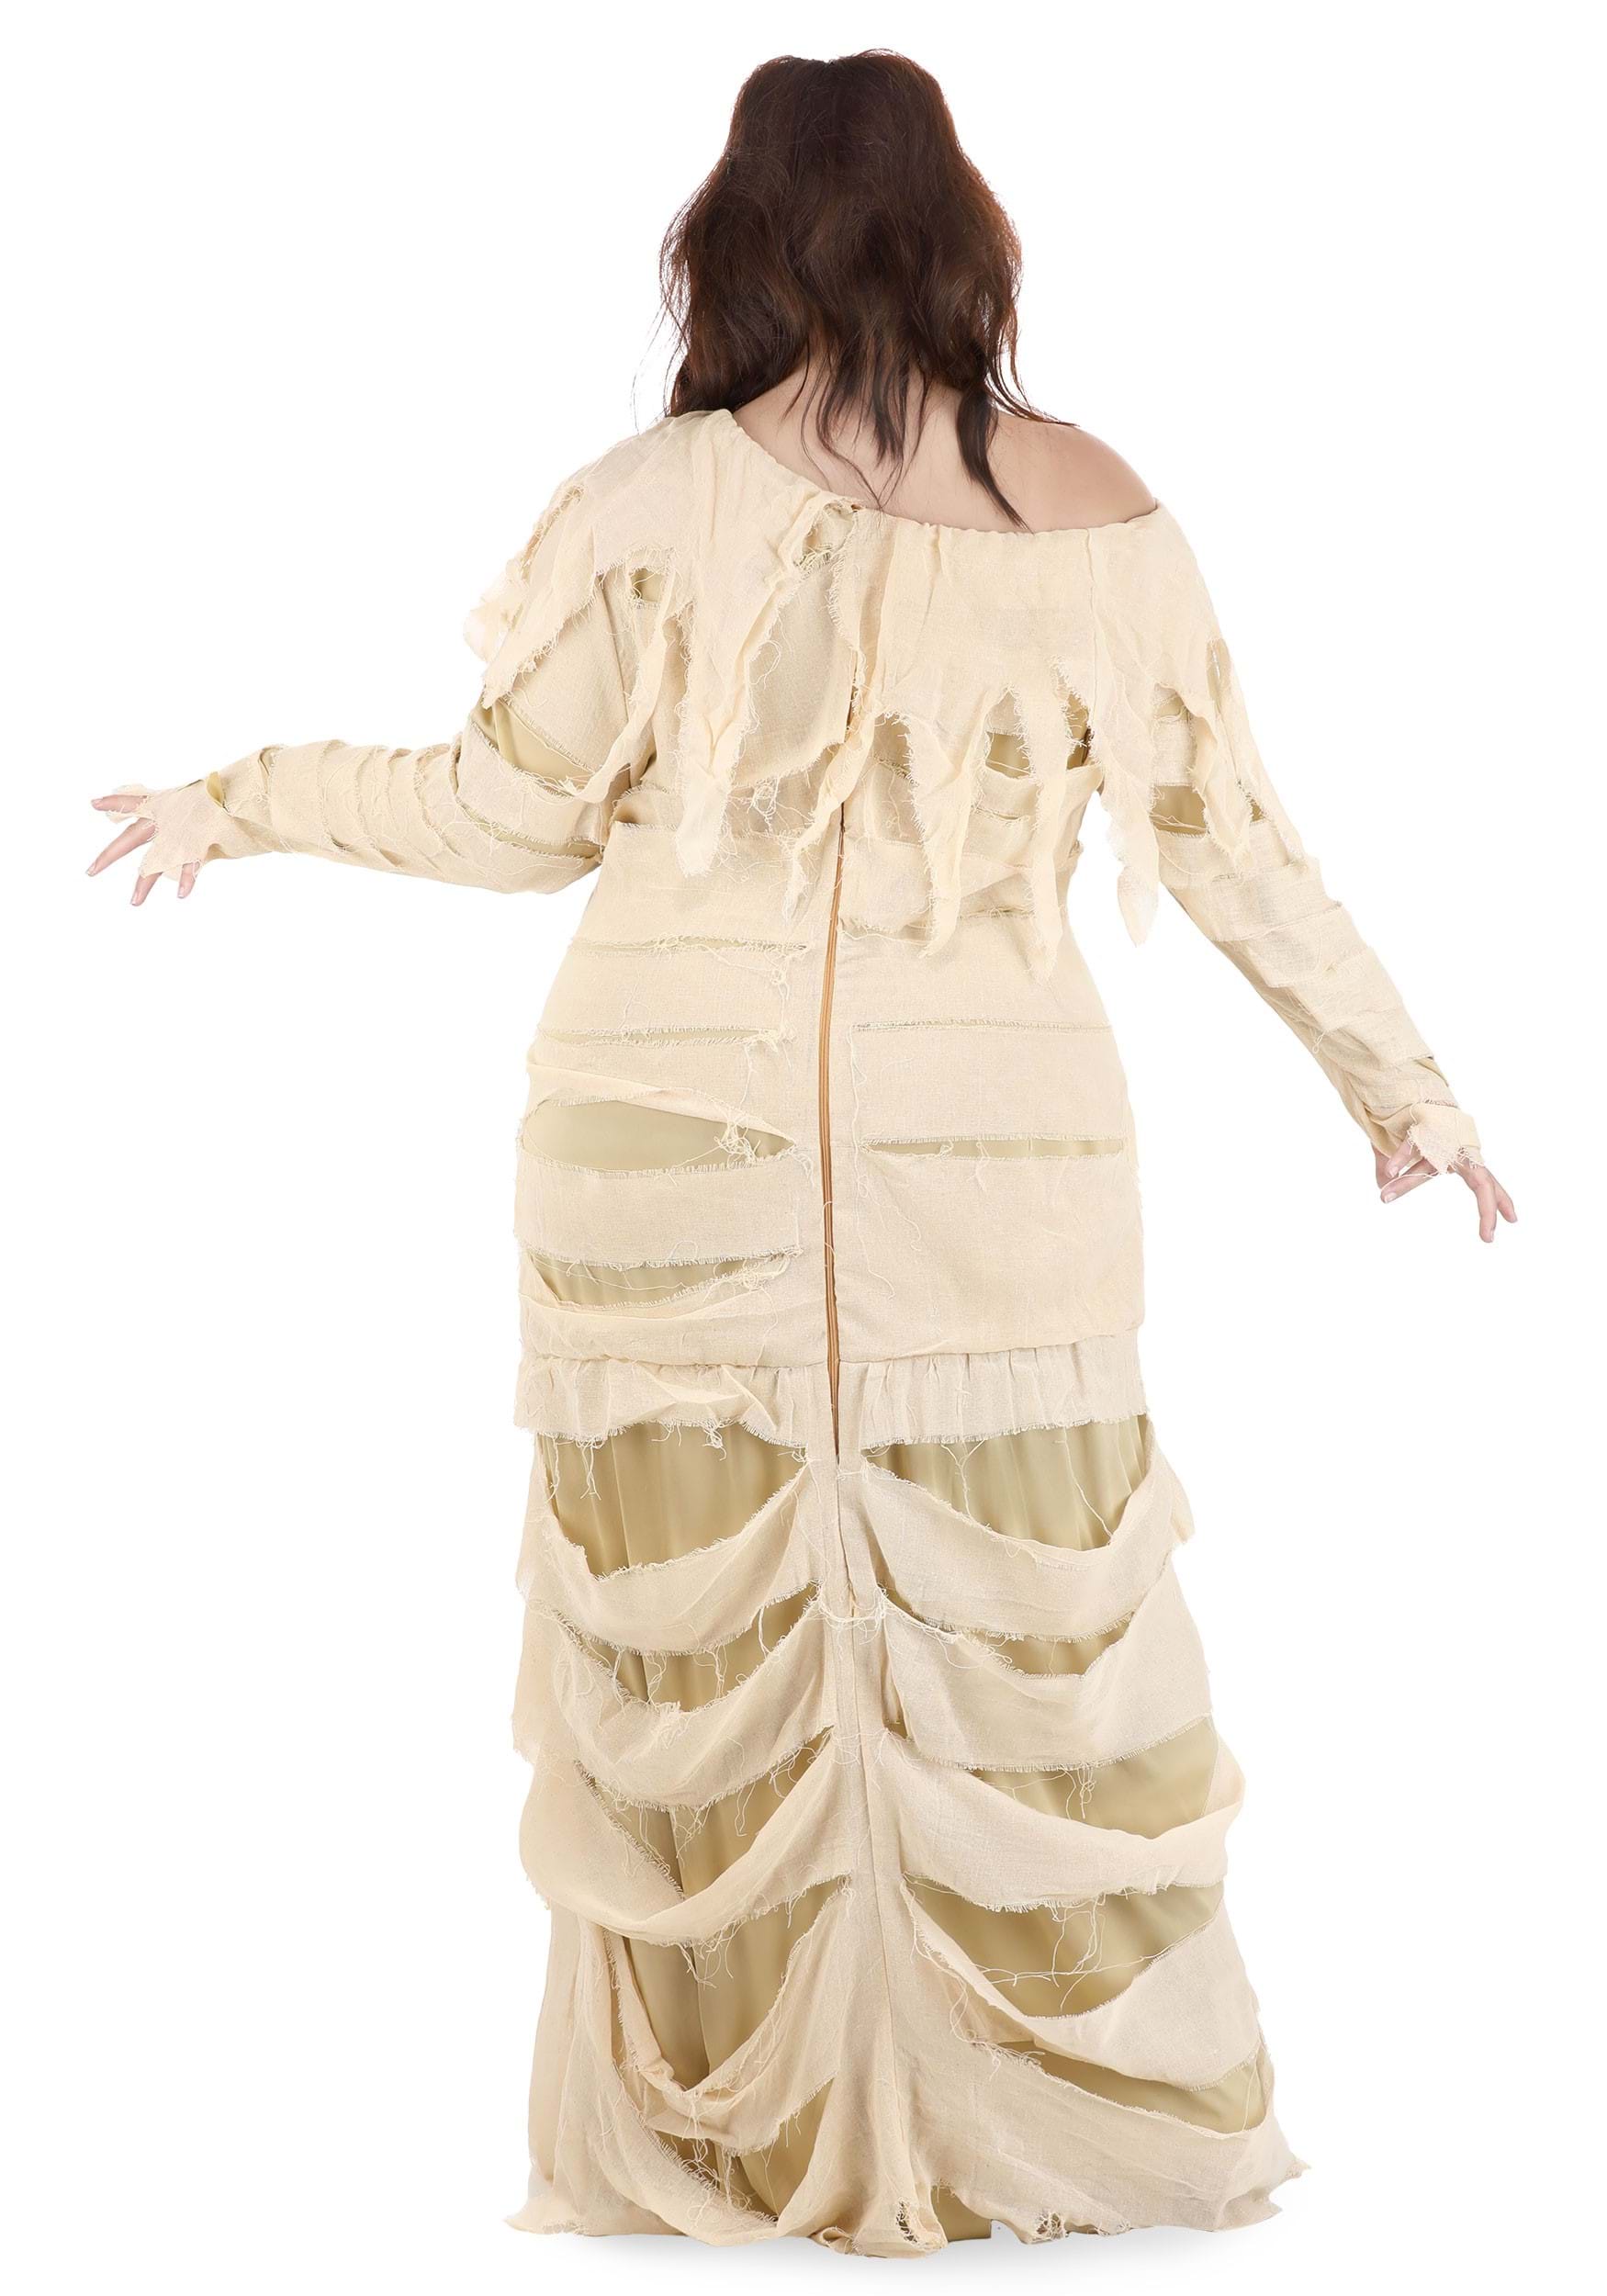 Full Length Mummy Plus Size Costume For Women